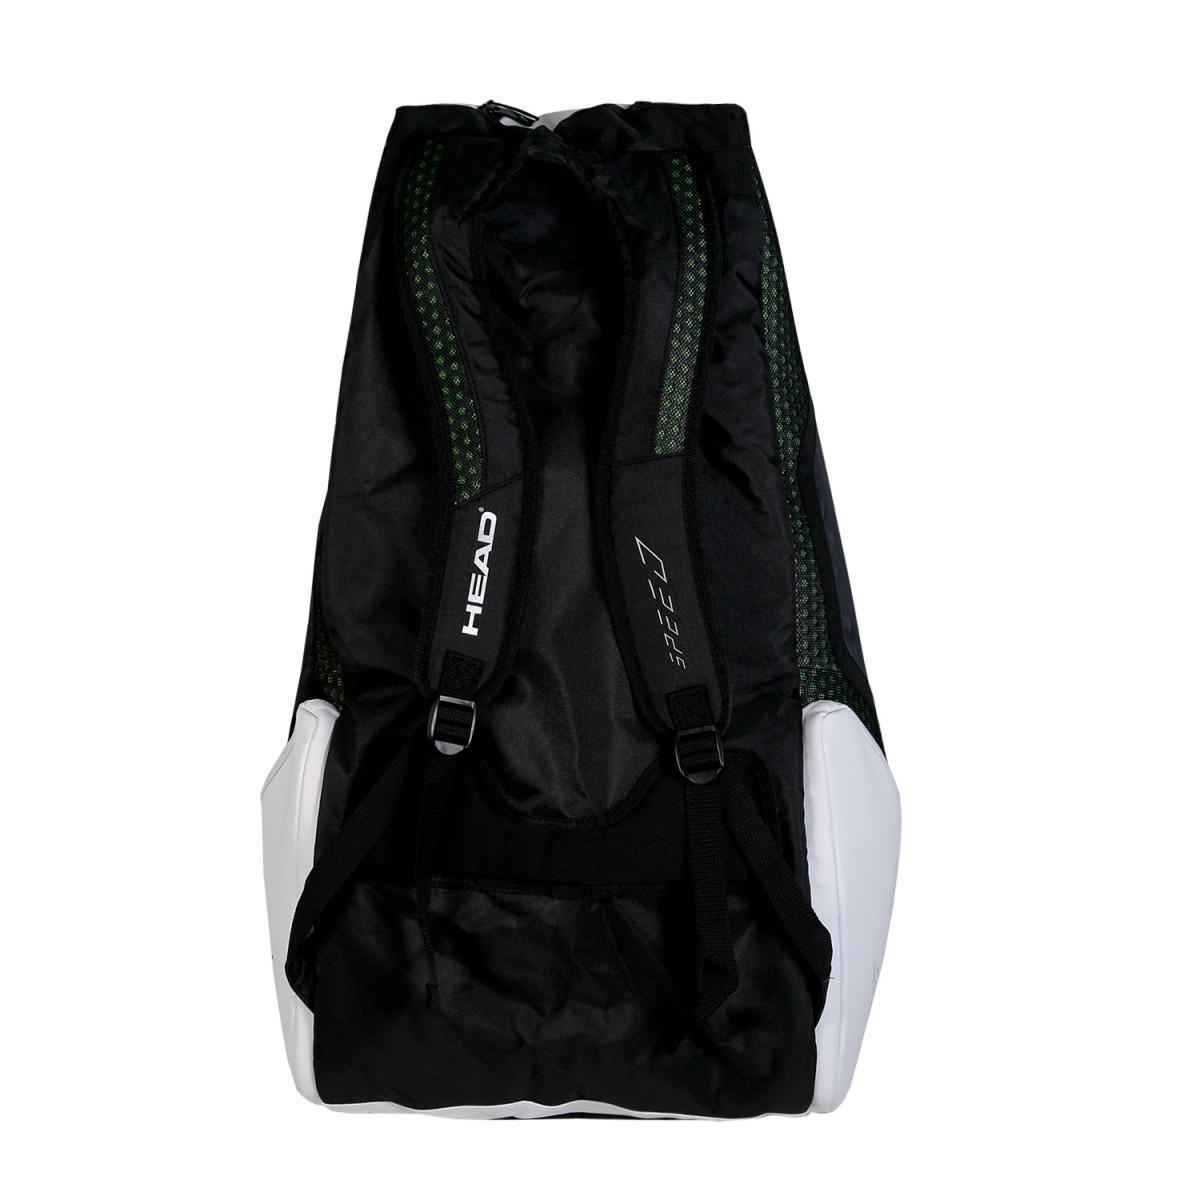 Теннисная сумка Head Novak Djokovic 9R Supercombi black/white